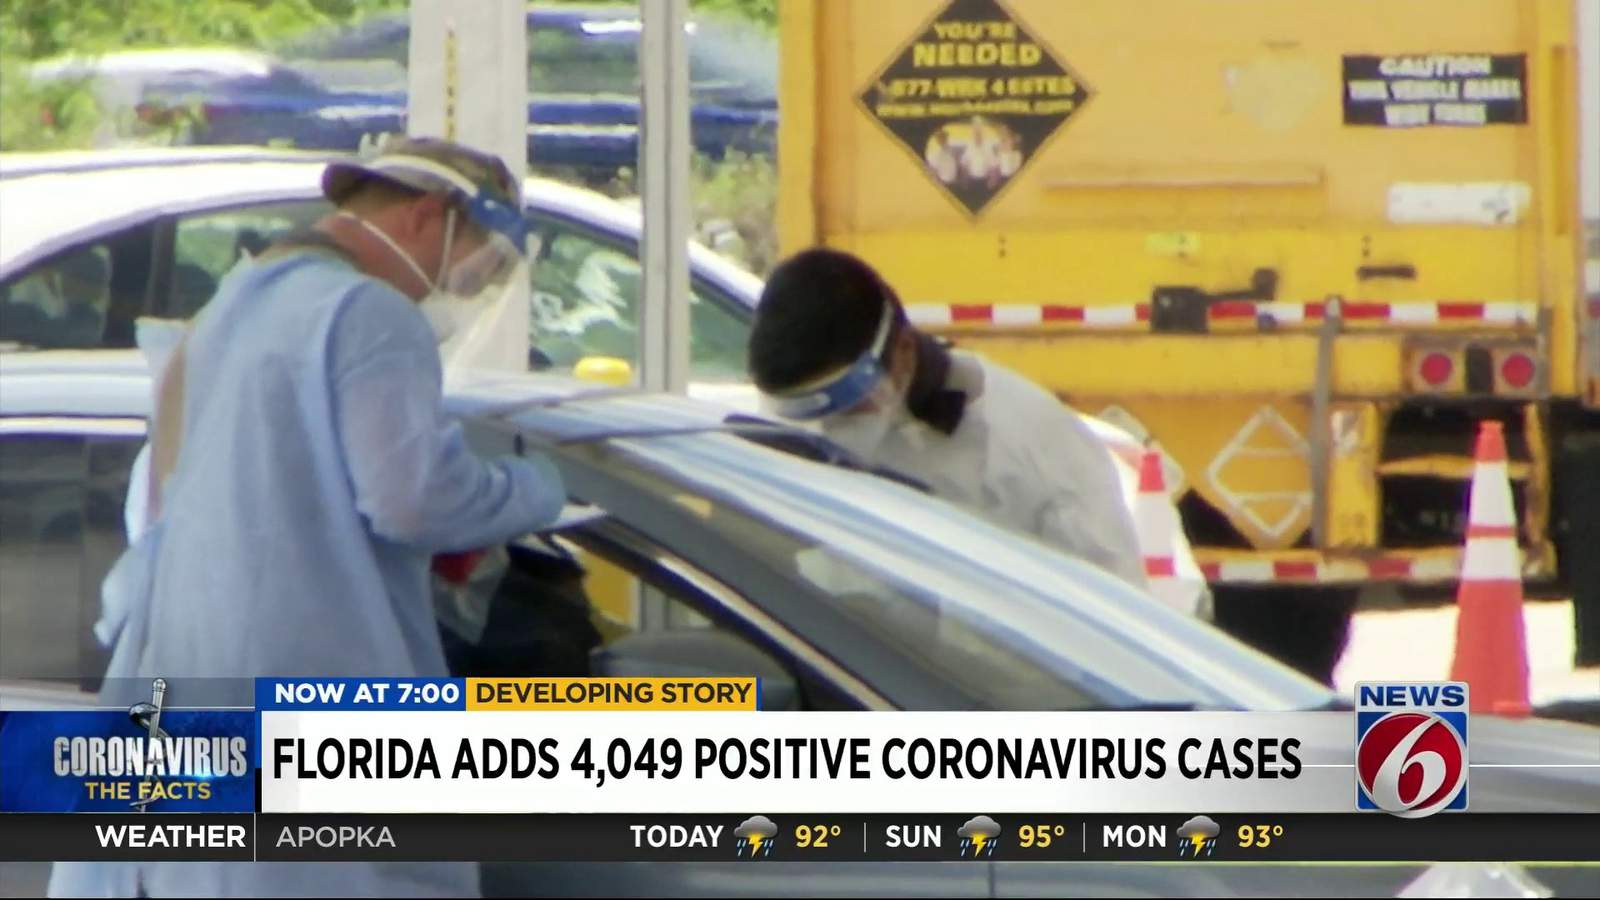 Florida adds 4,049 positive coronavirus cases